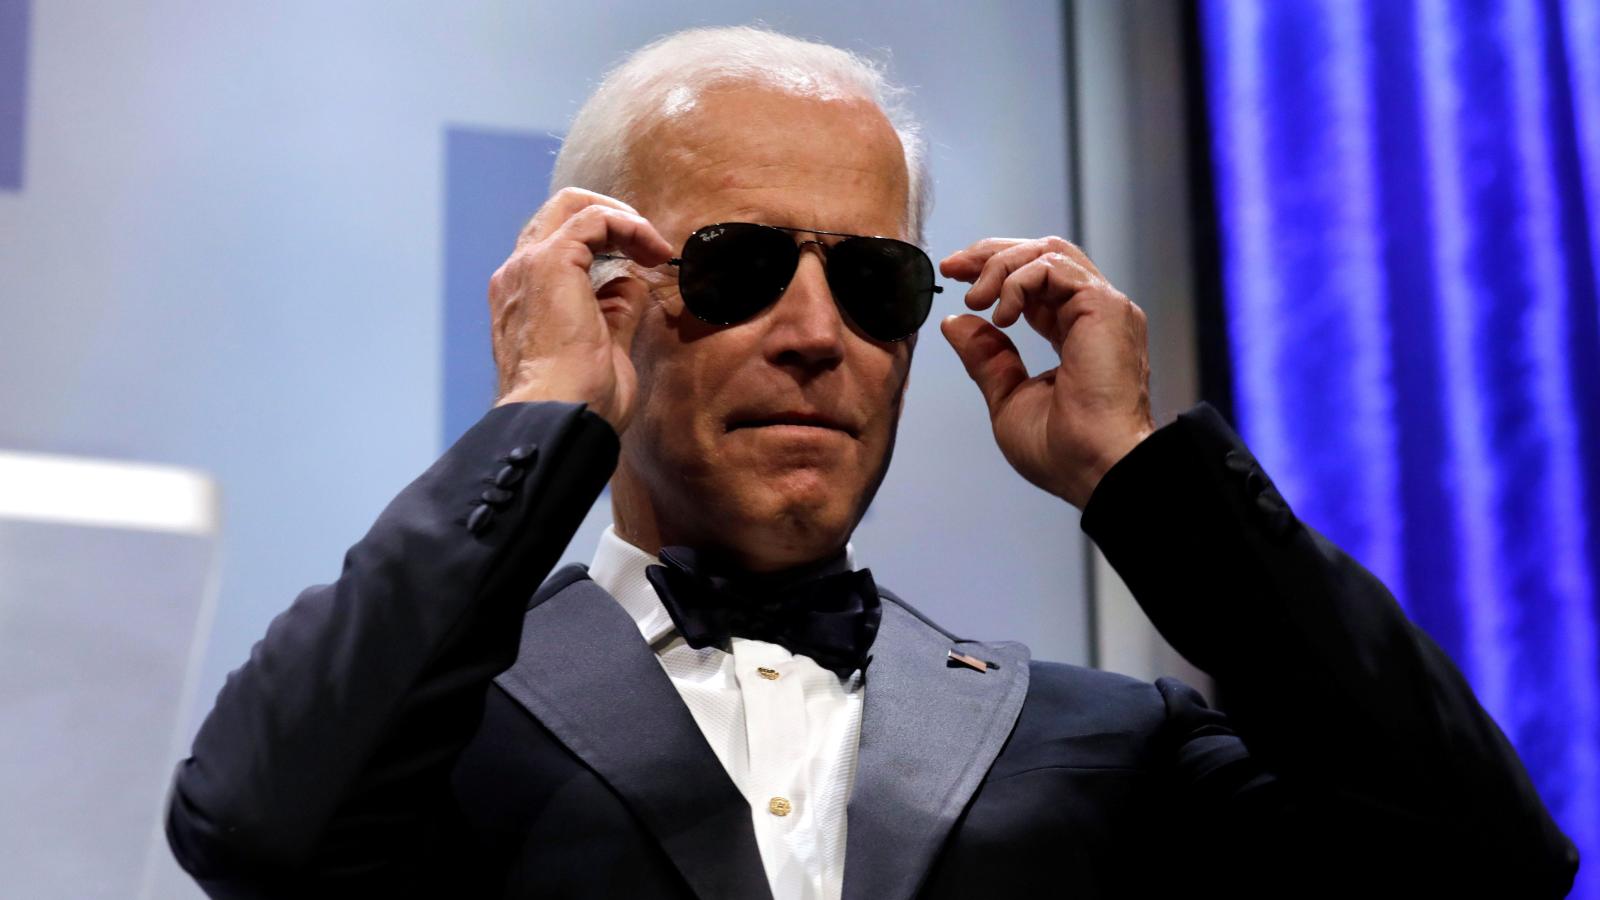 Why handsy Joe Biden should not run for president